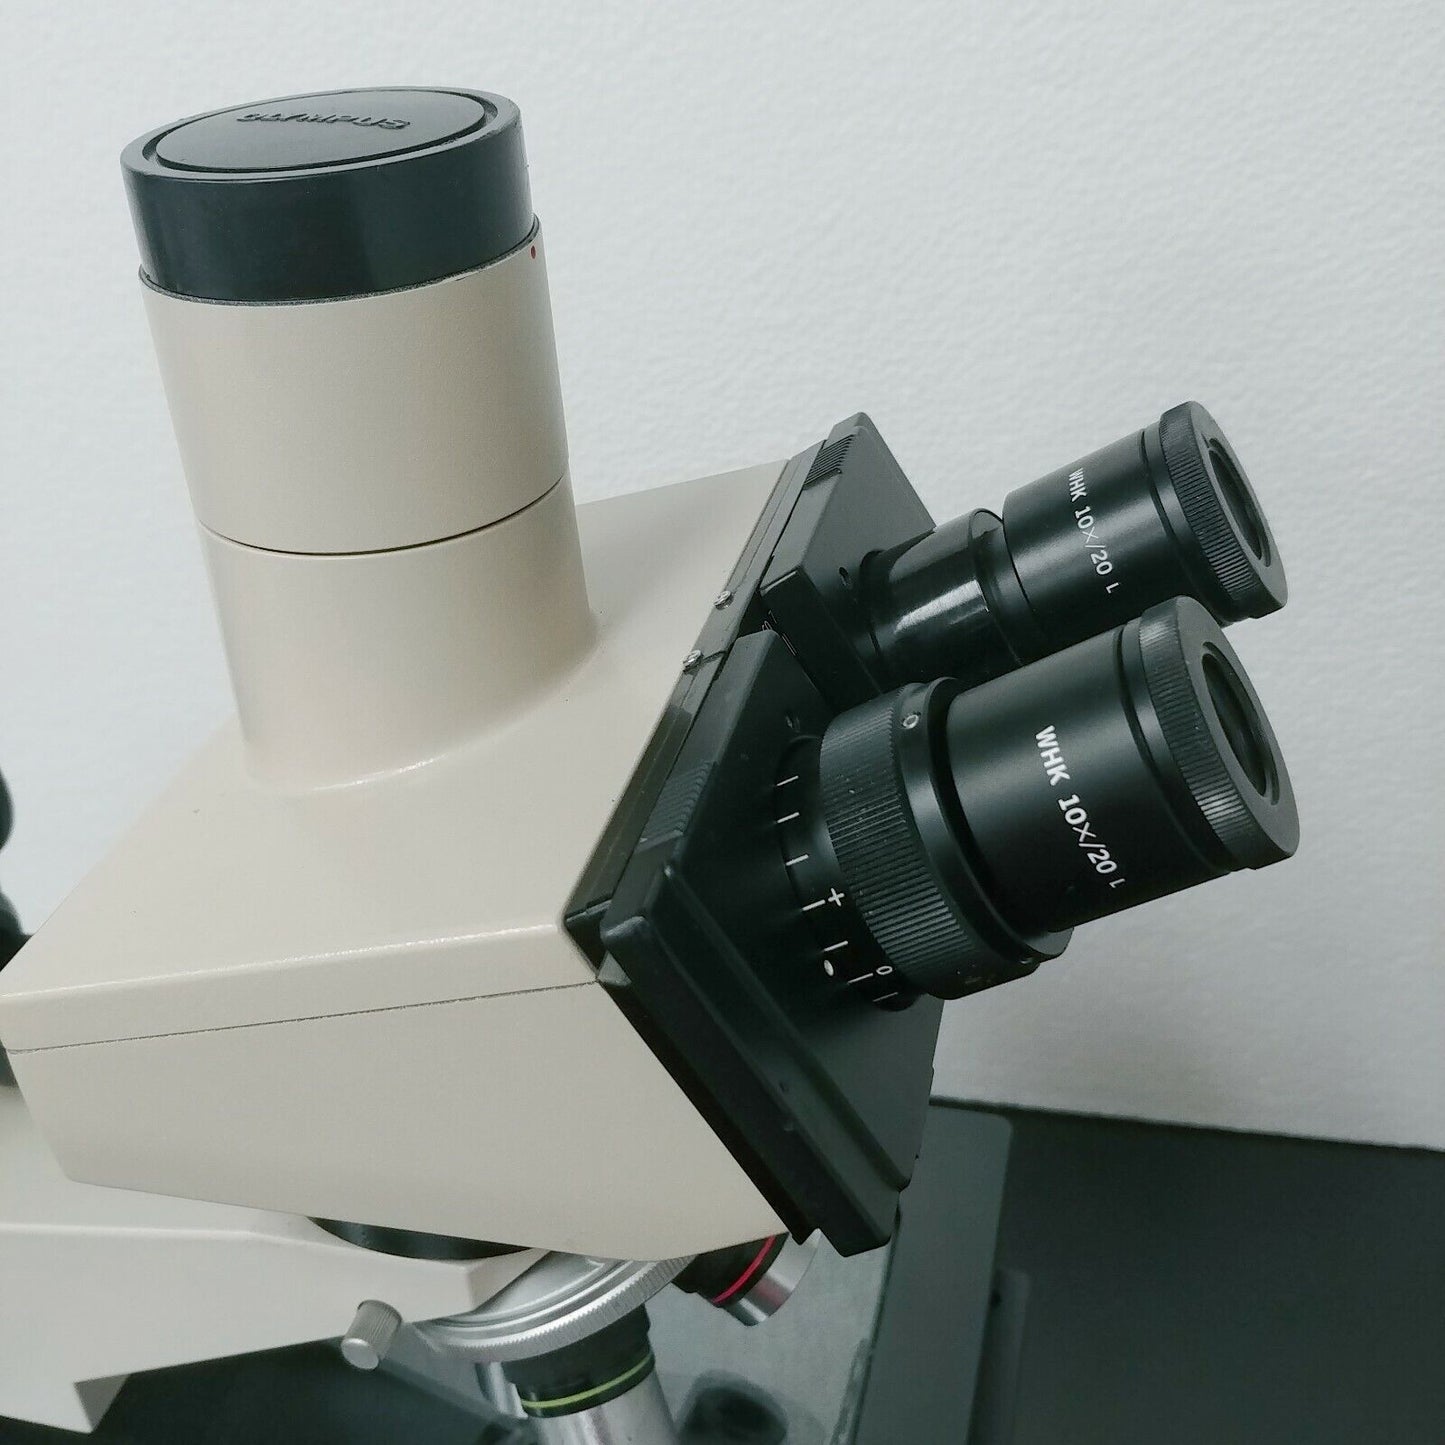 Olympus Microscope BHMJL Metallurgical Reflected Light - microscopemarketplace